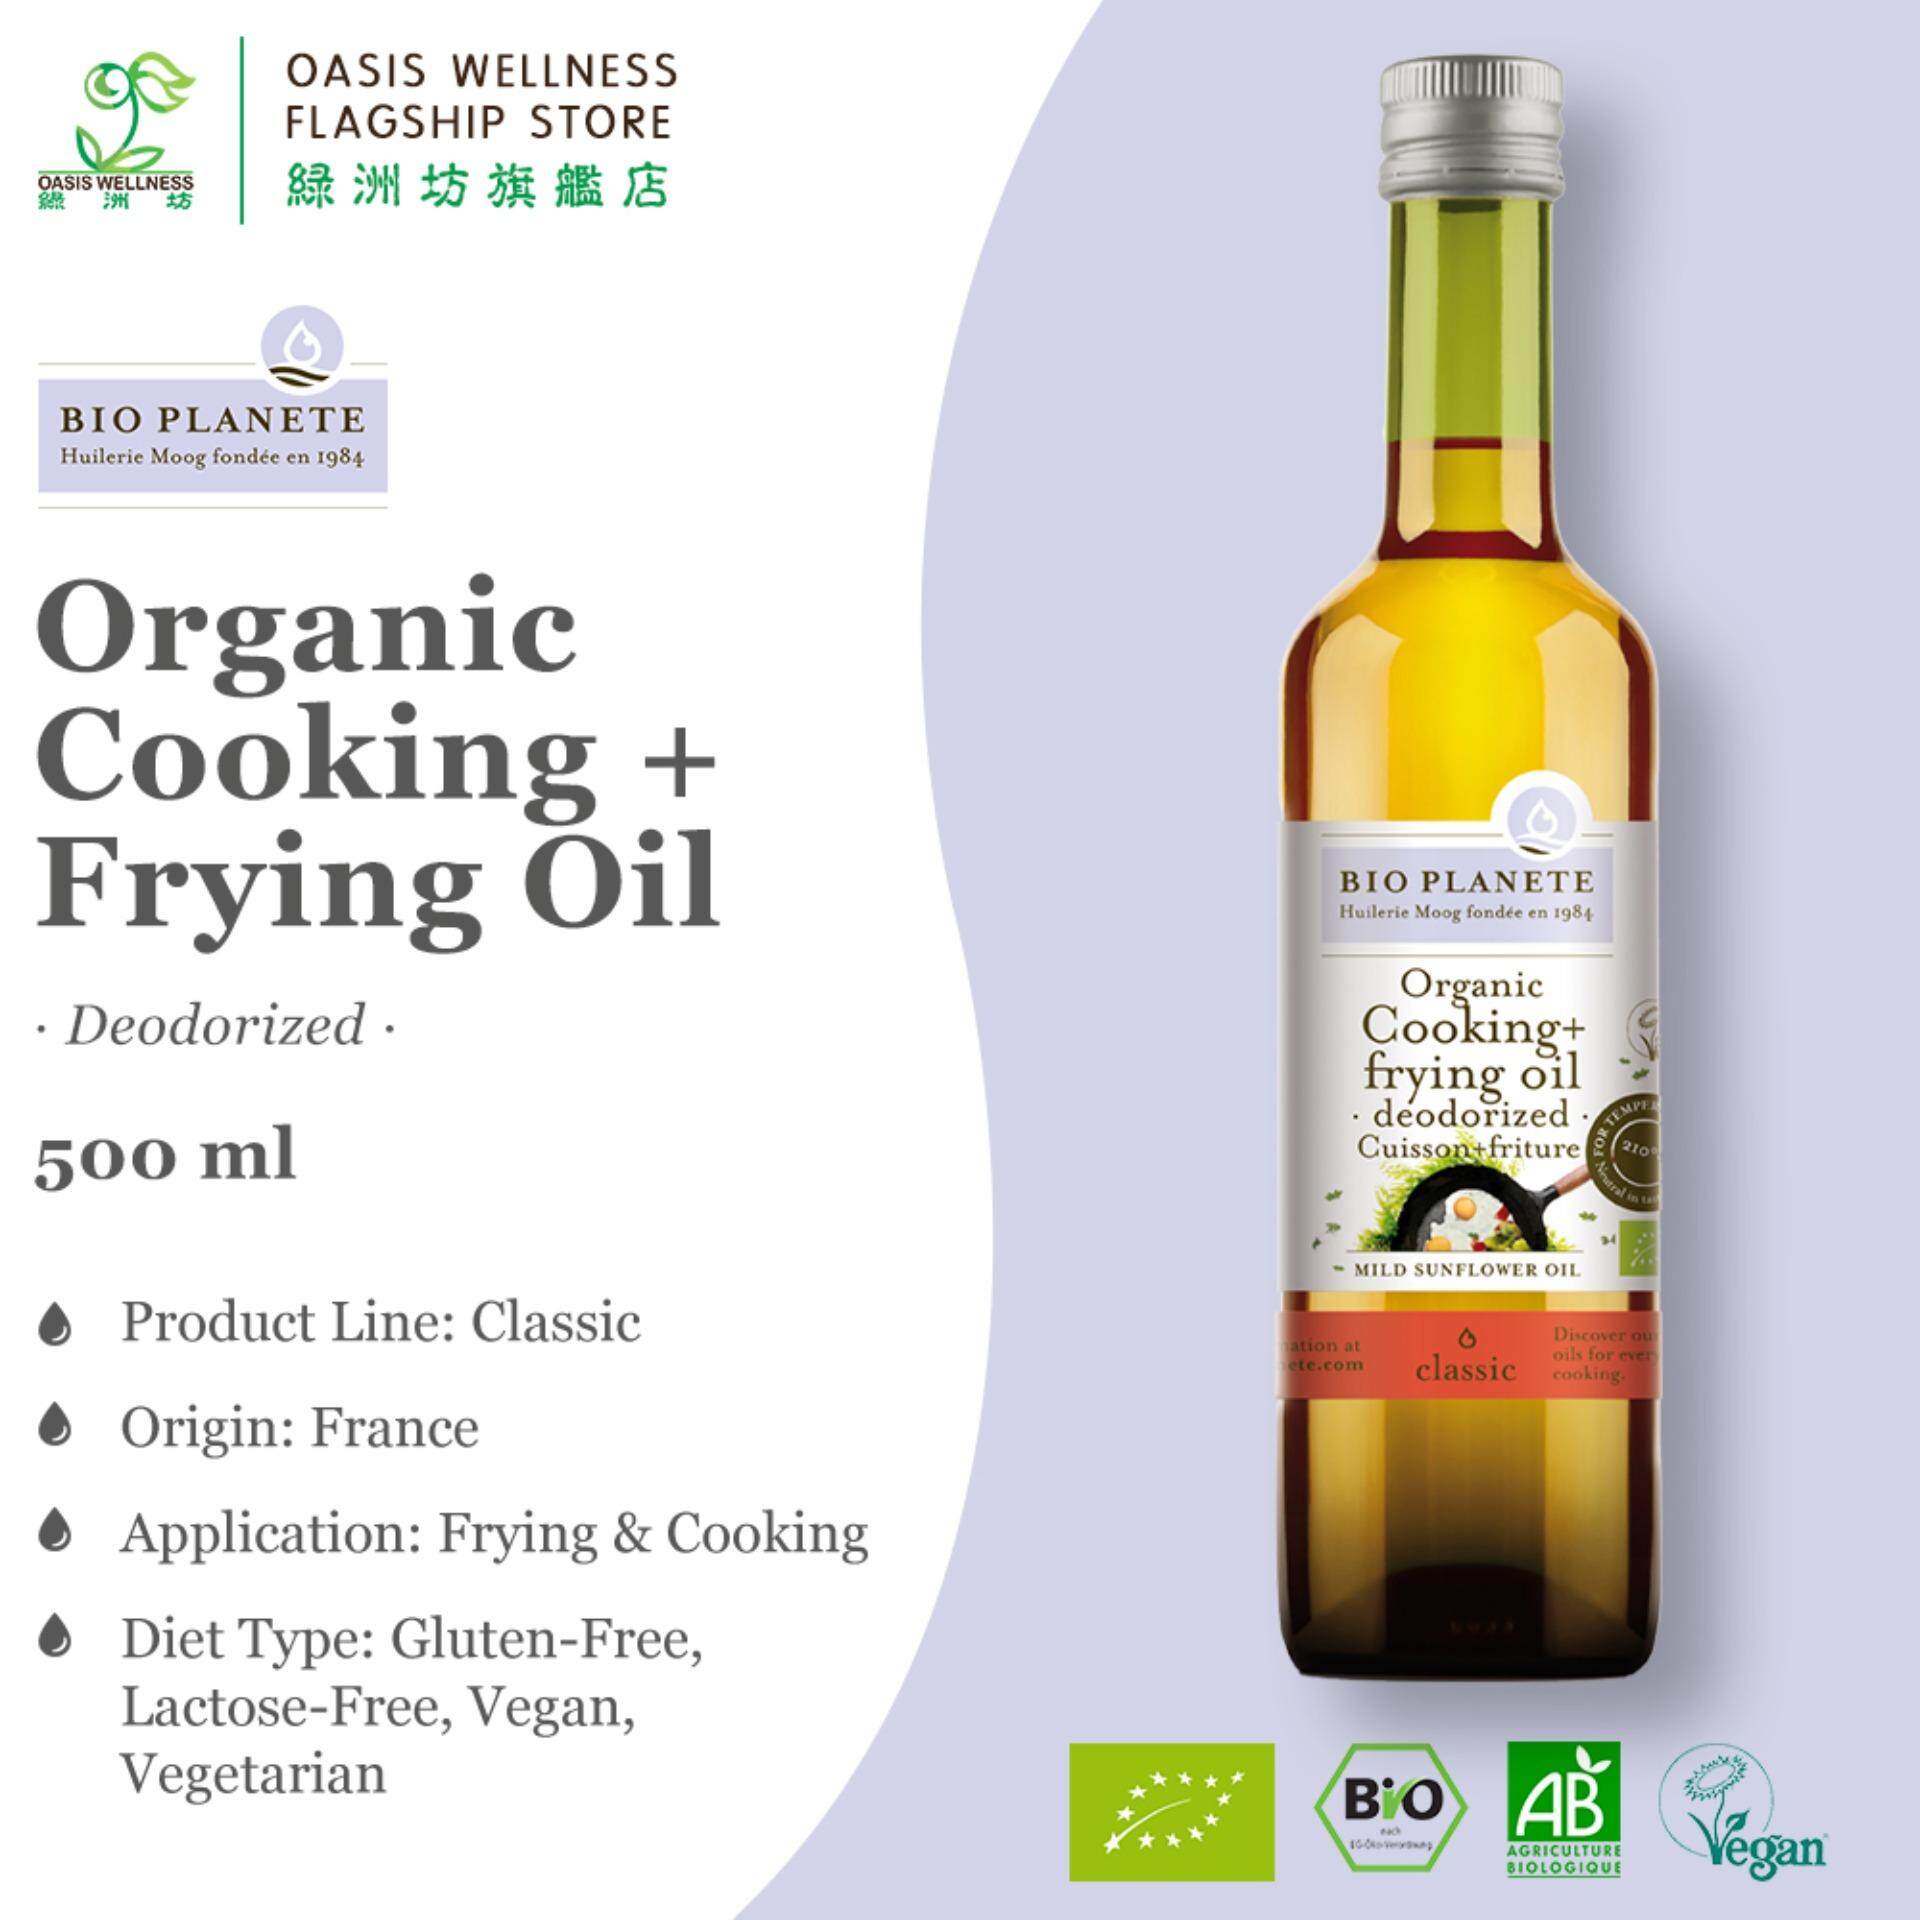 BIO PLANETE Organic Cooking Oil - Sunflower Oil (500ml)